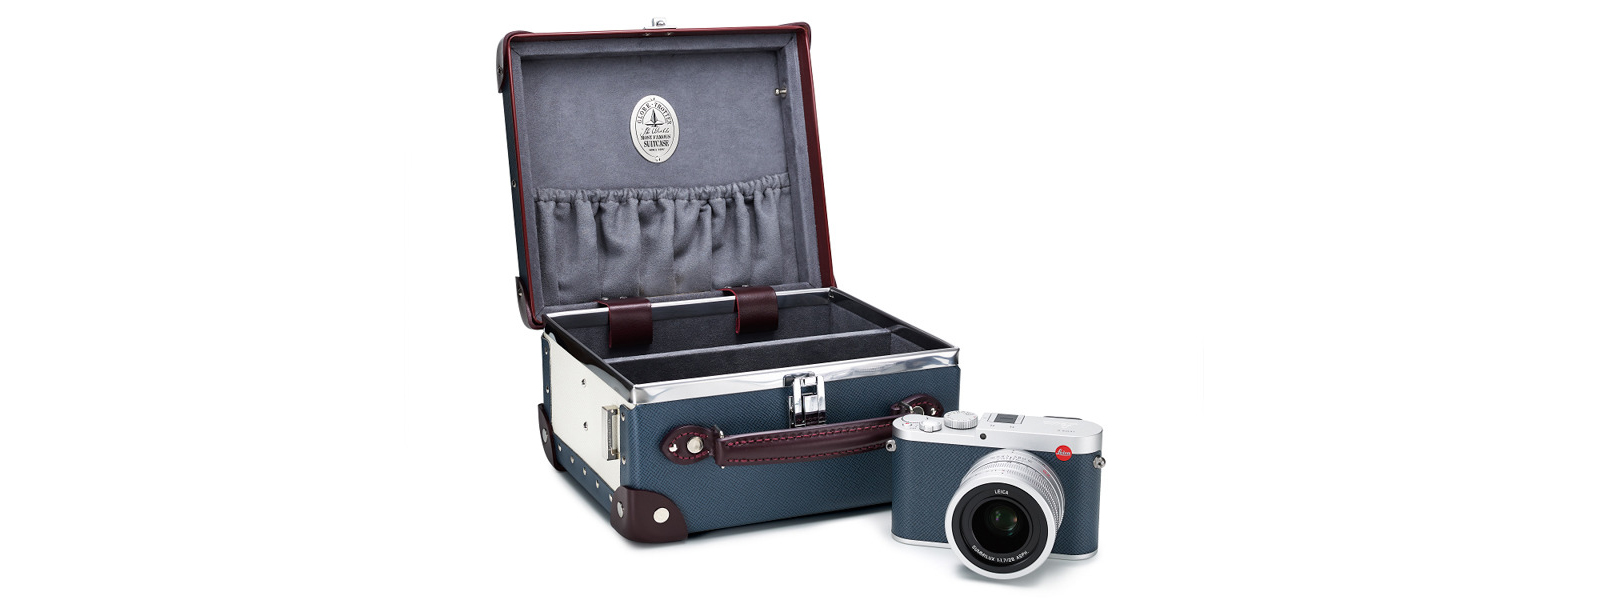 Leica-Q-Globe-Trotter-limited-edition-camera4.jpg